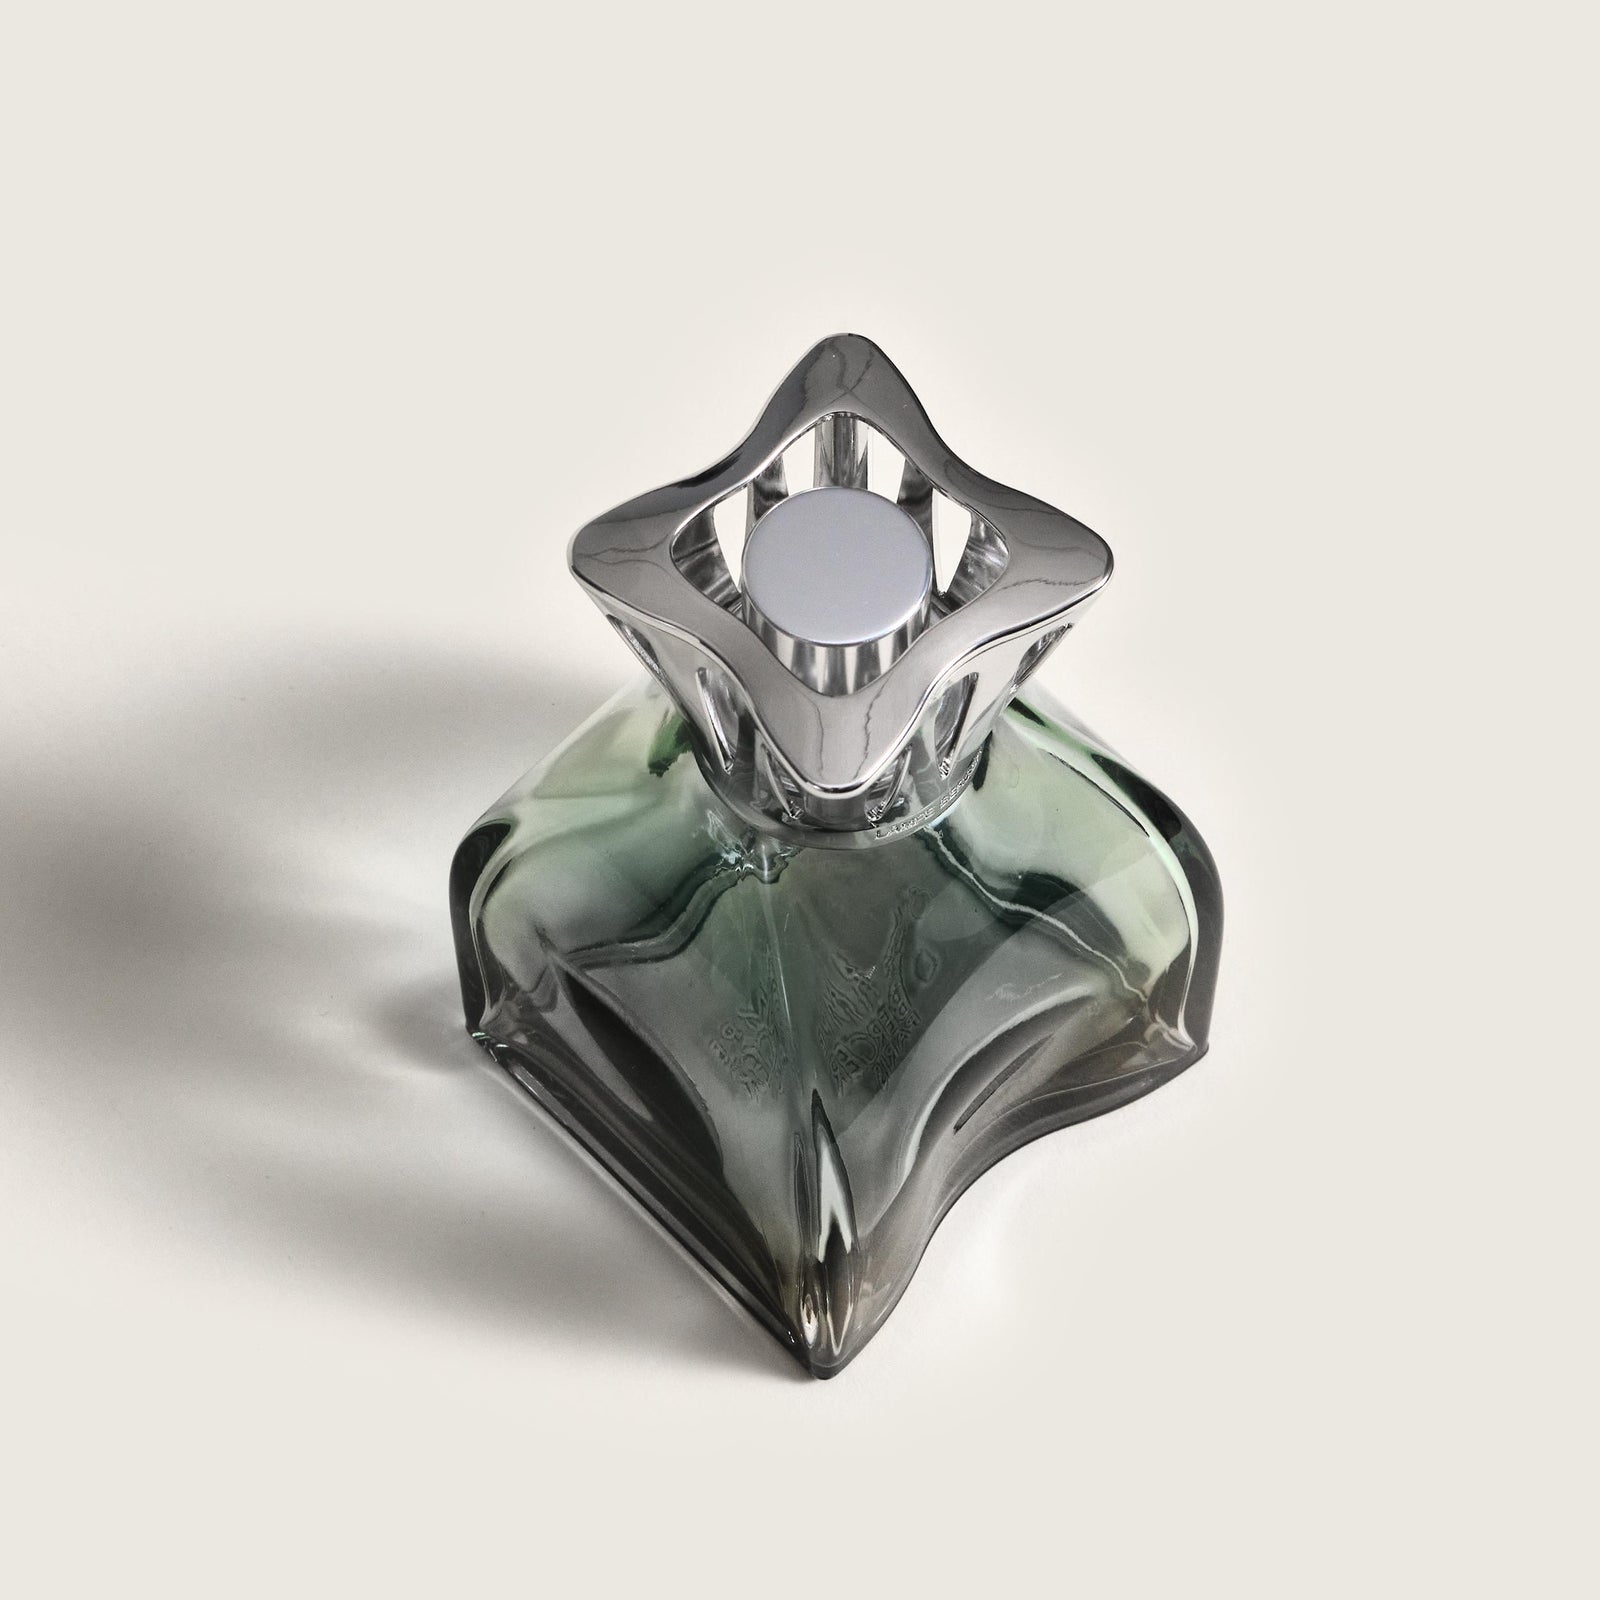 Coffret lampe Berger - Lilly Vert    - Maison Berger Paris - Parfums d'ambiance - 